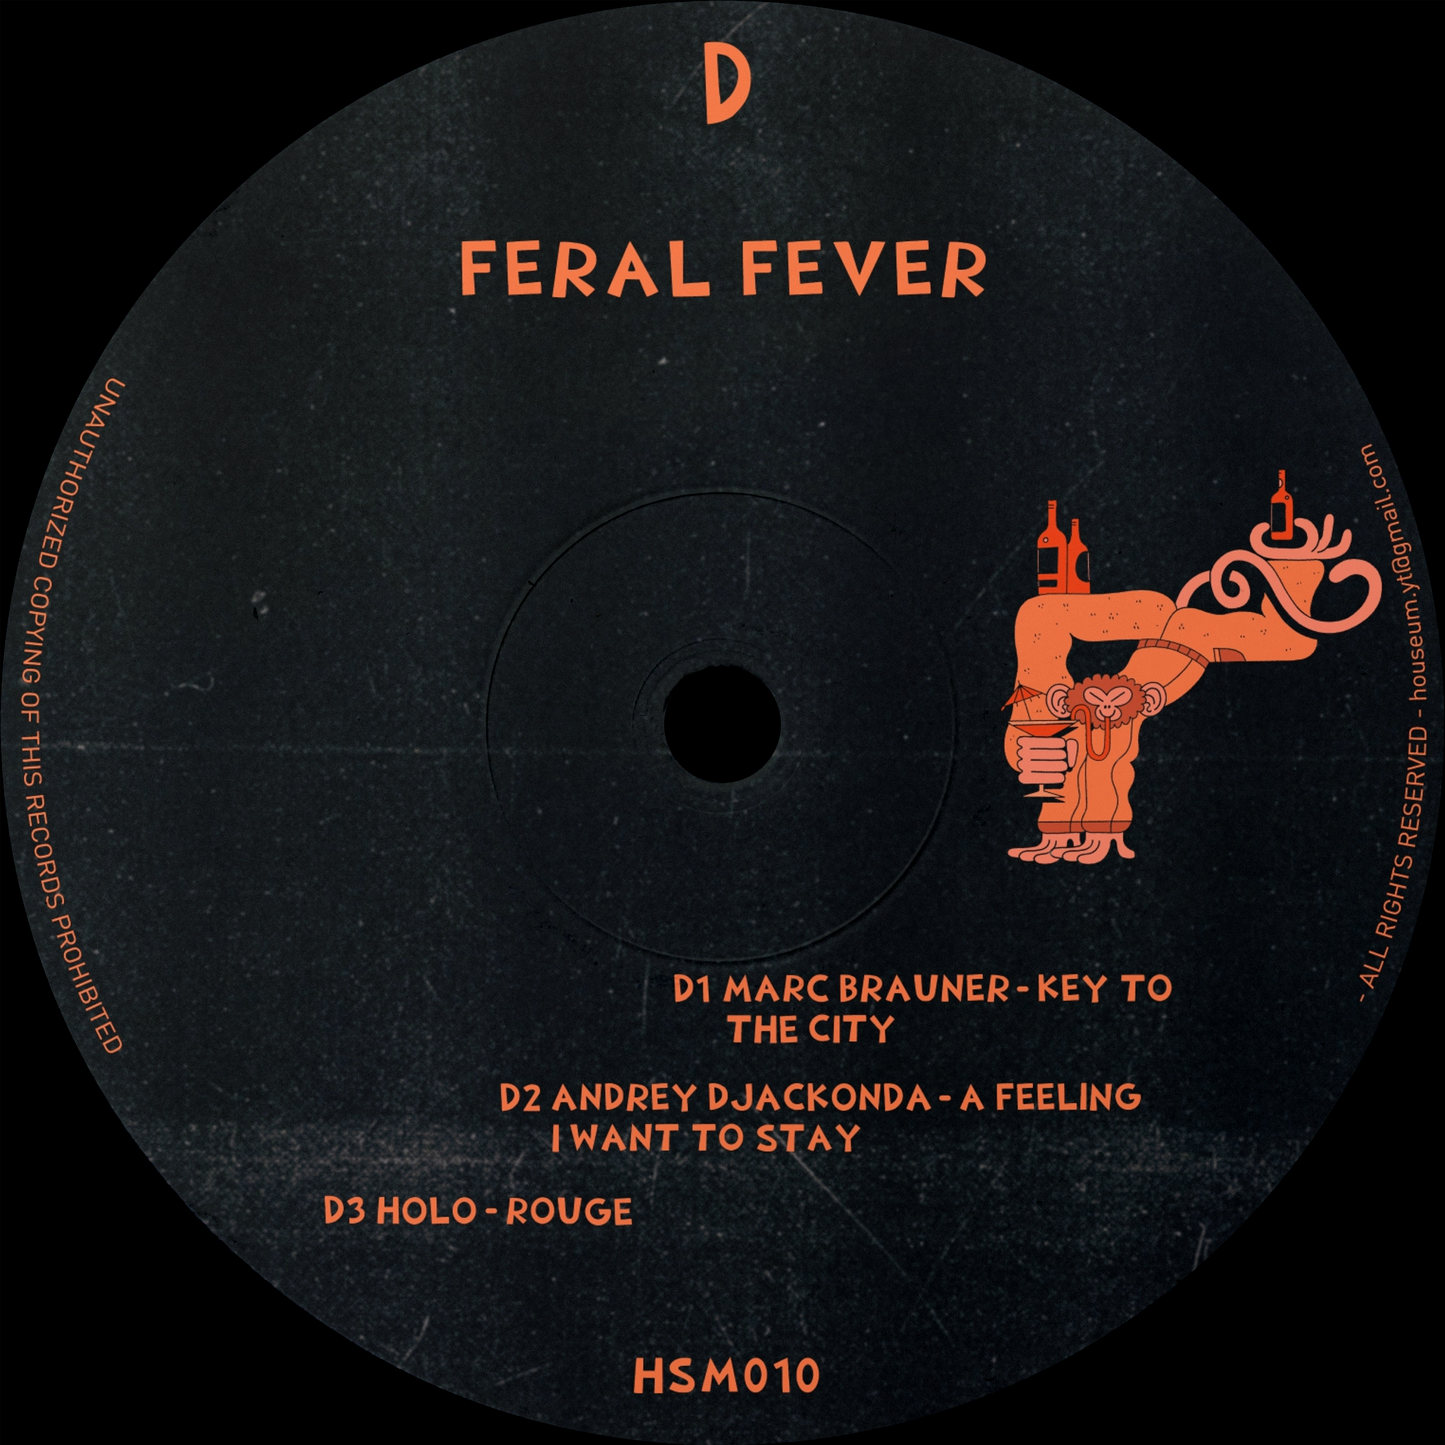 HSM010 Double vinyl compilation - Feral Fever